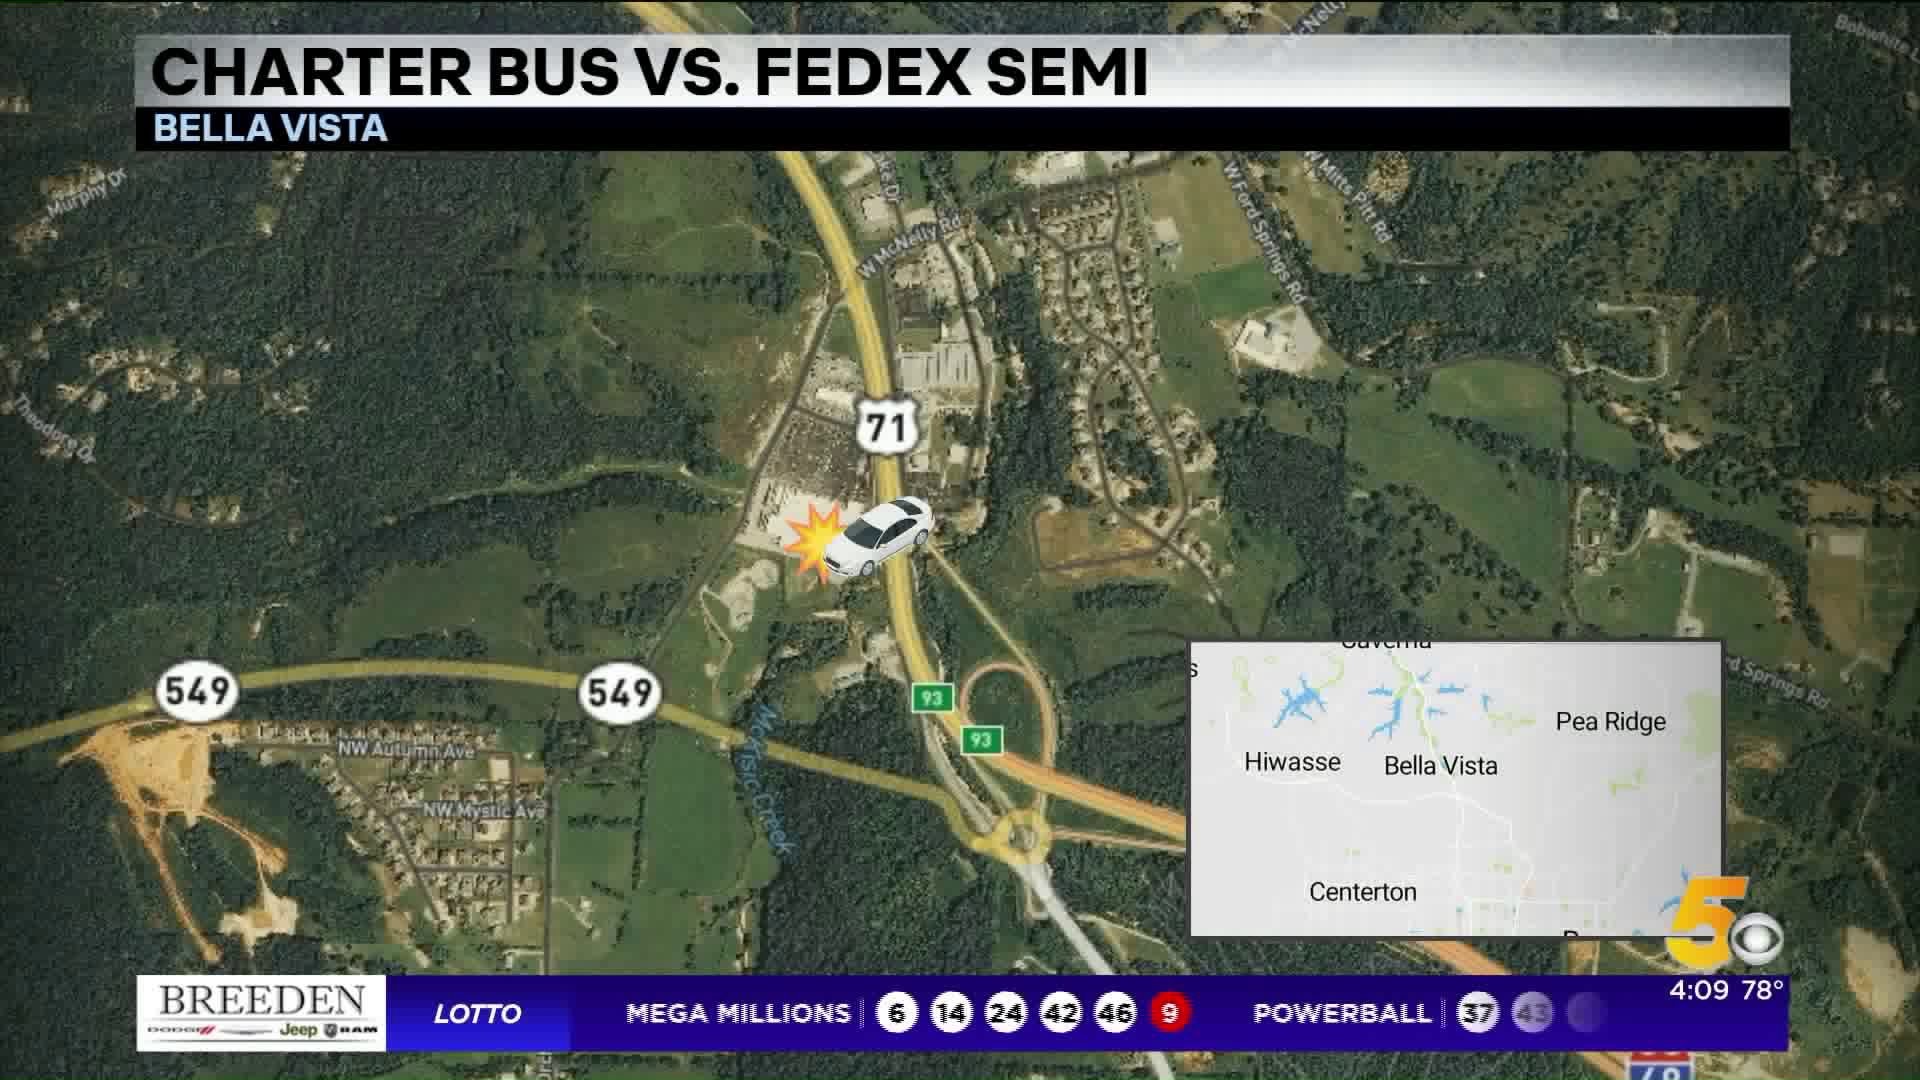 Charter Bus vs. Fedex Semi